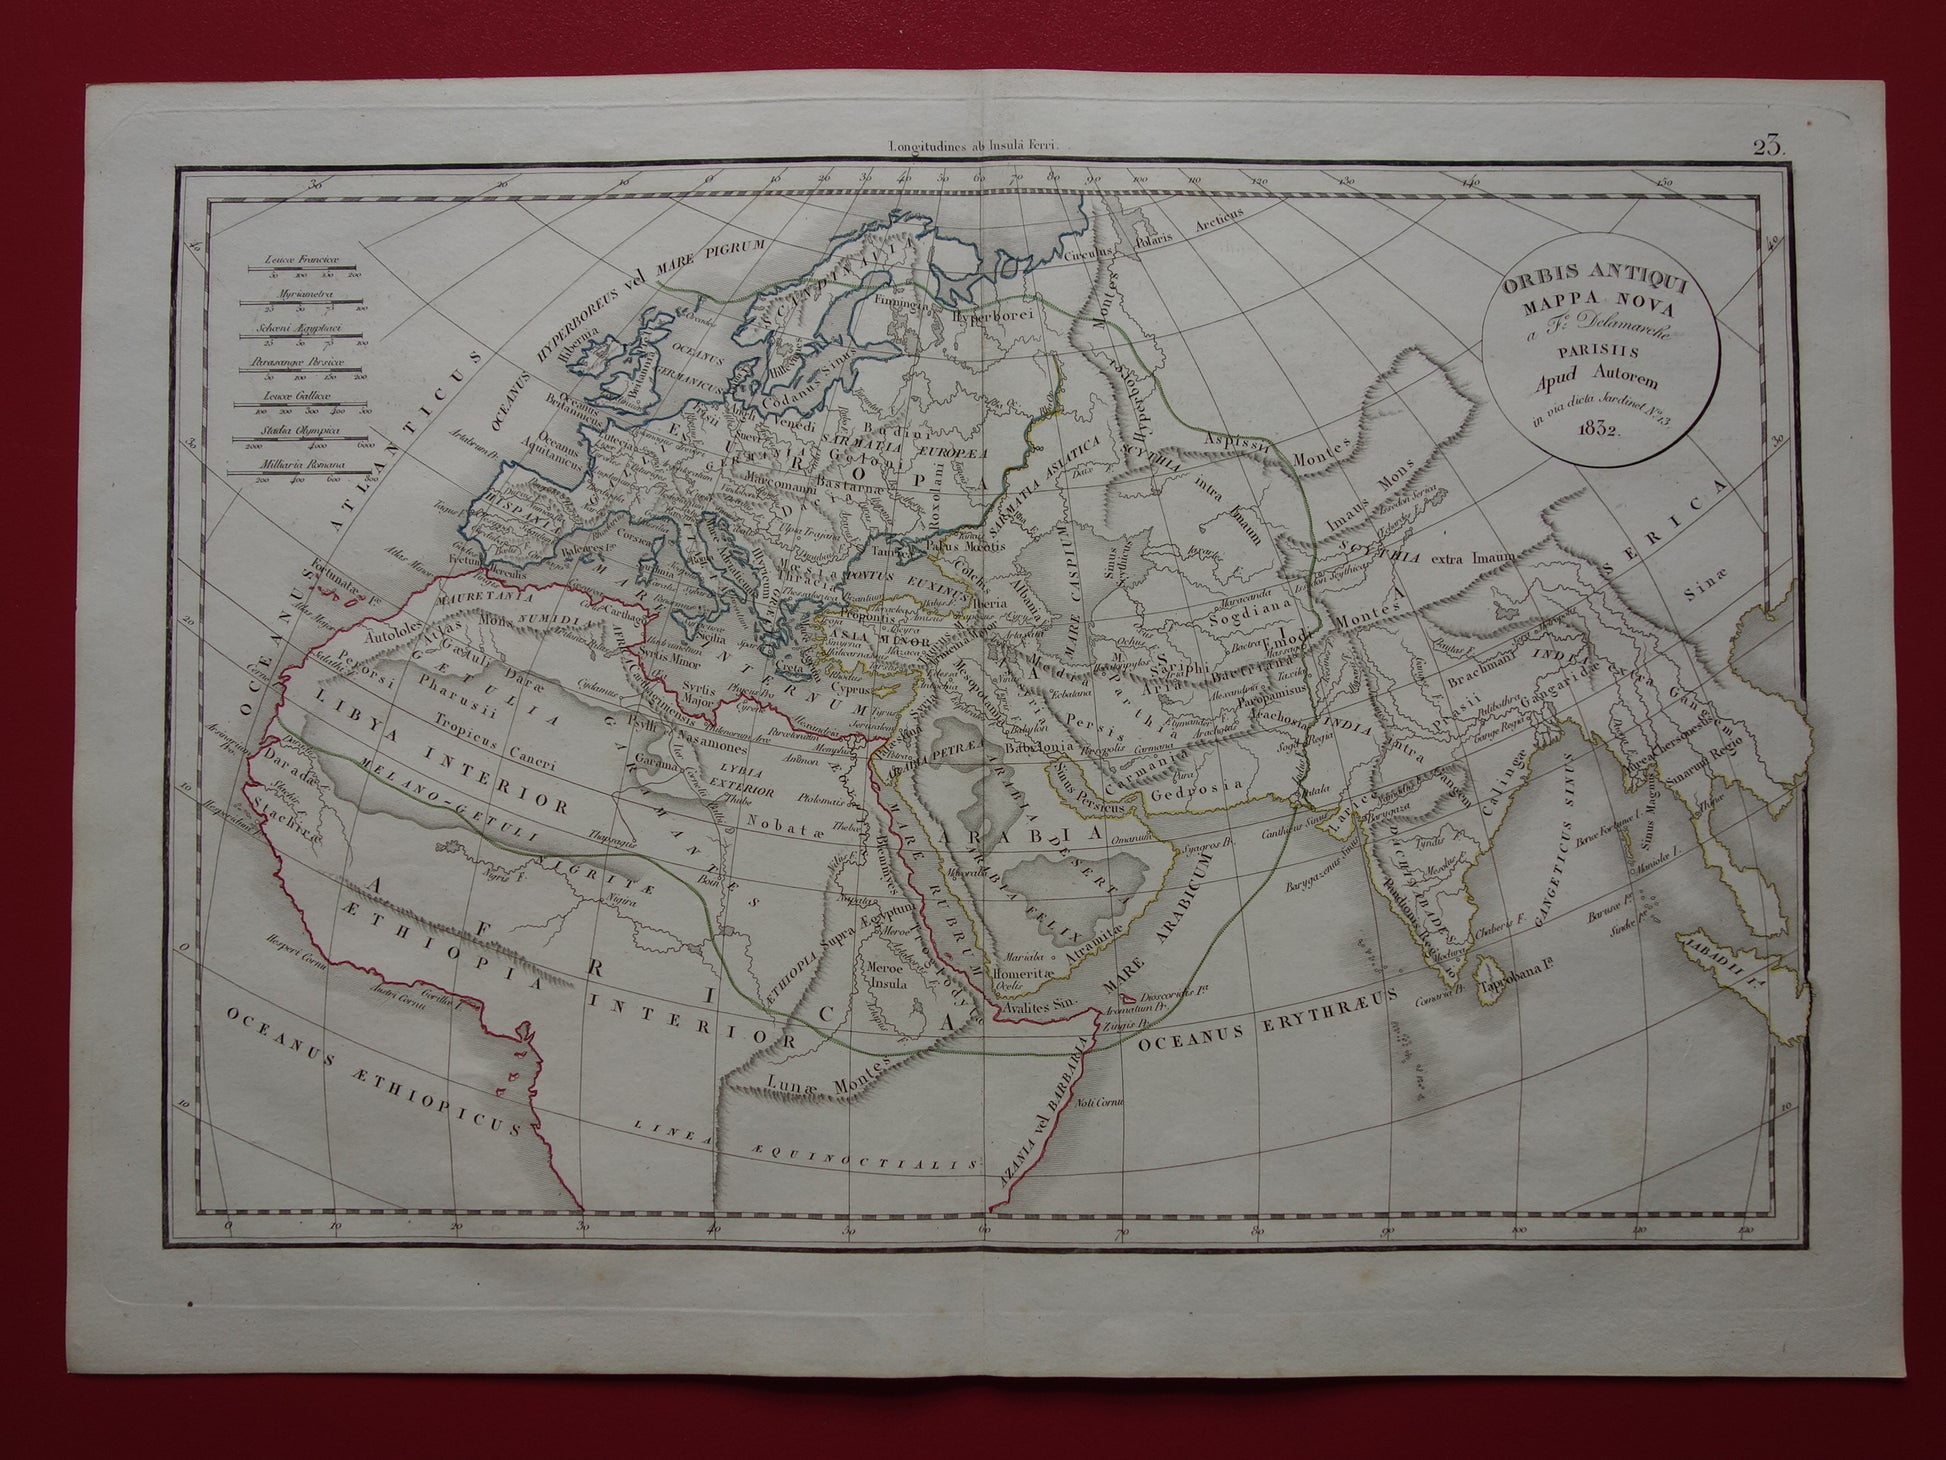 Orbis Antiqui mappa nova a F. Delamarche Parisiis Apud Autorem 1832